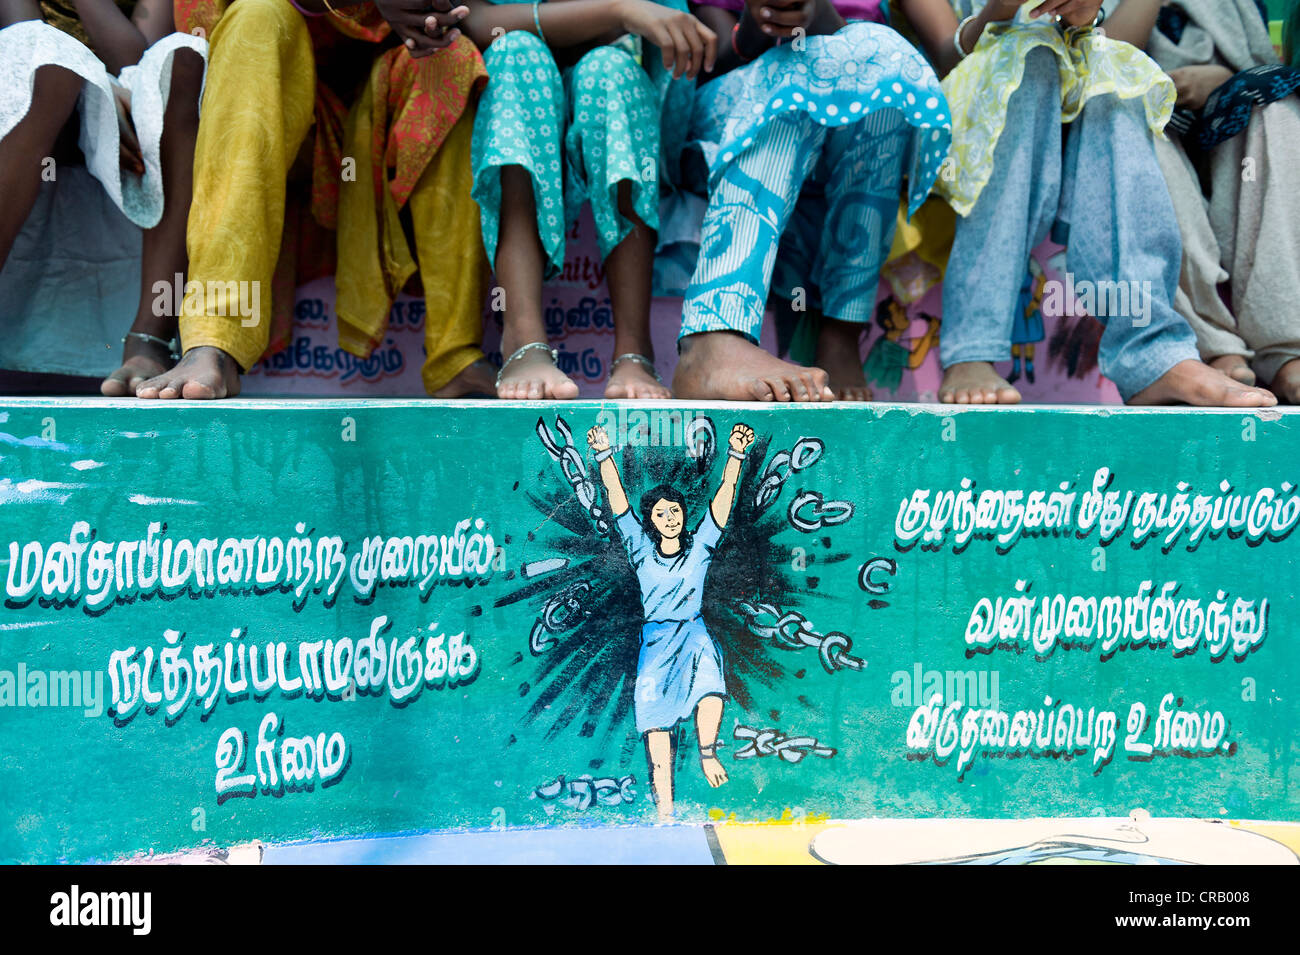 Immagine dipinta contro il lavoro minorile, Kutti Rajiyam o mondo Kids, Karur, Tamil Nadu, India, Asia Foto Stock